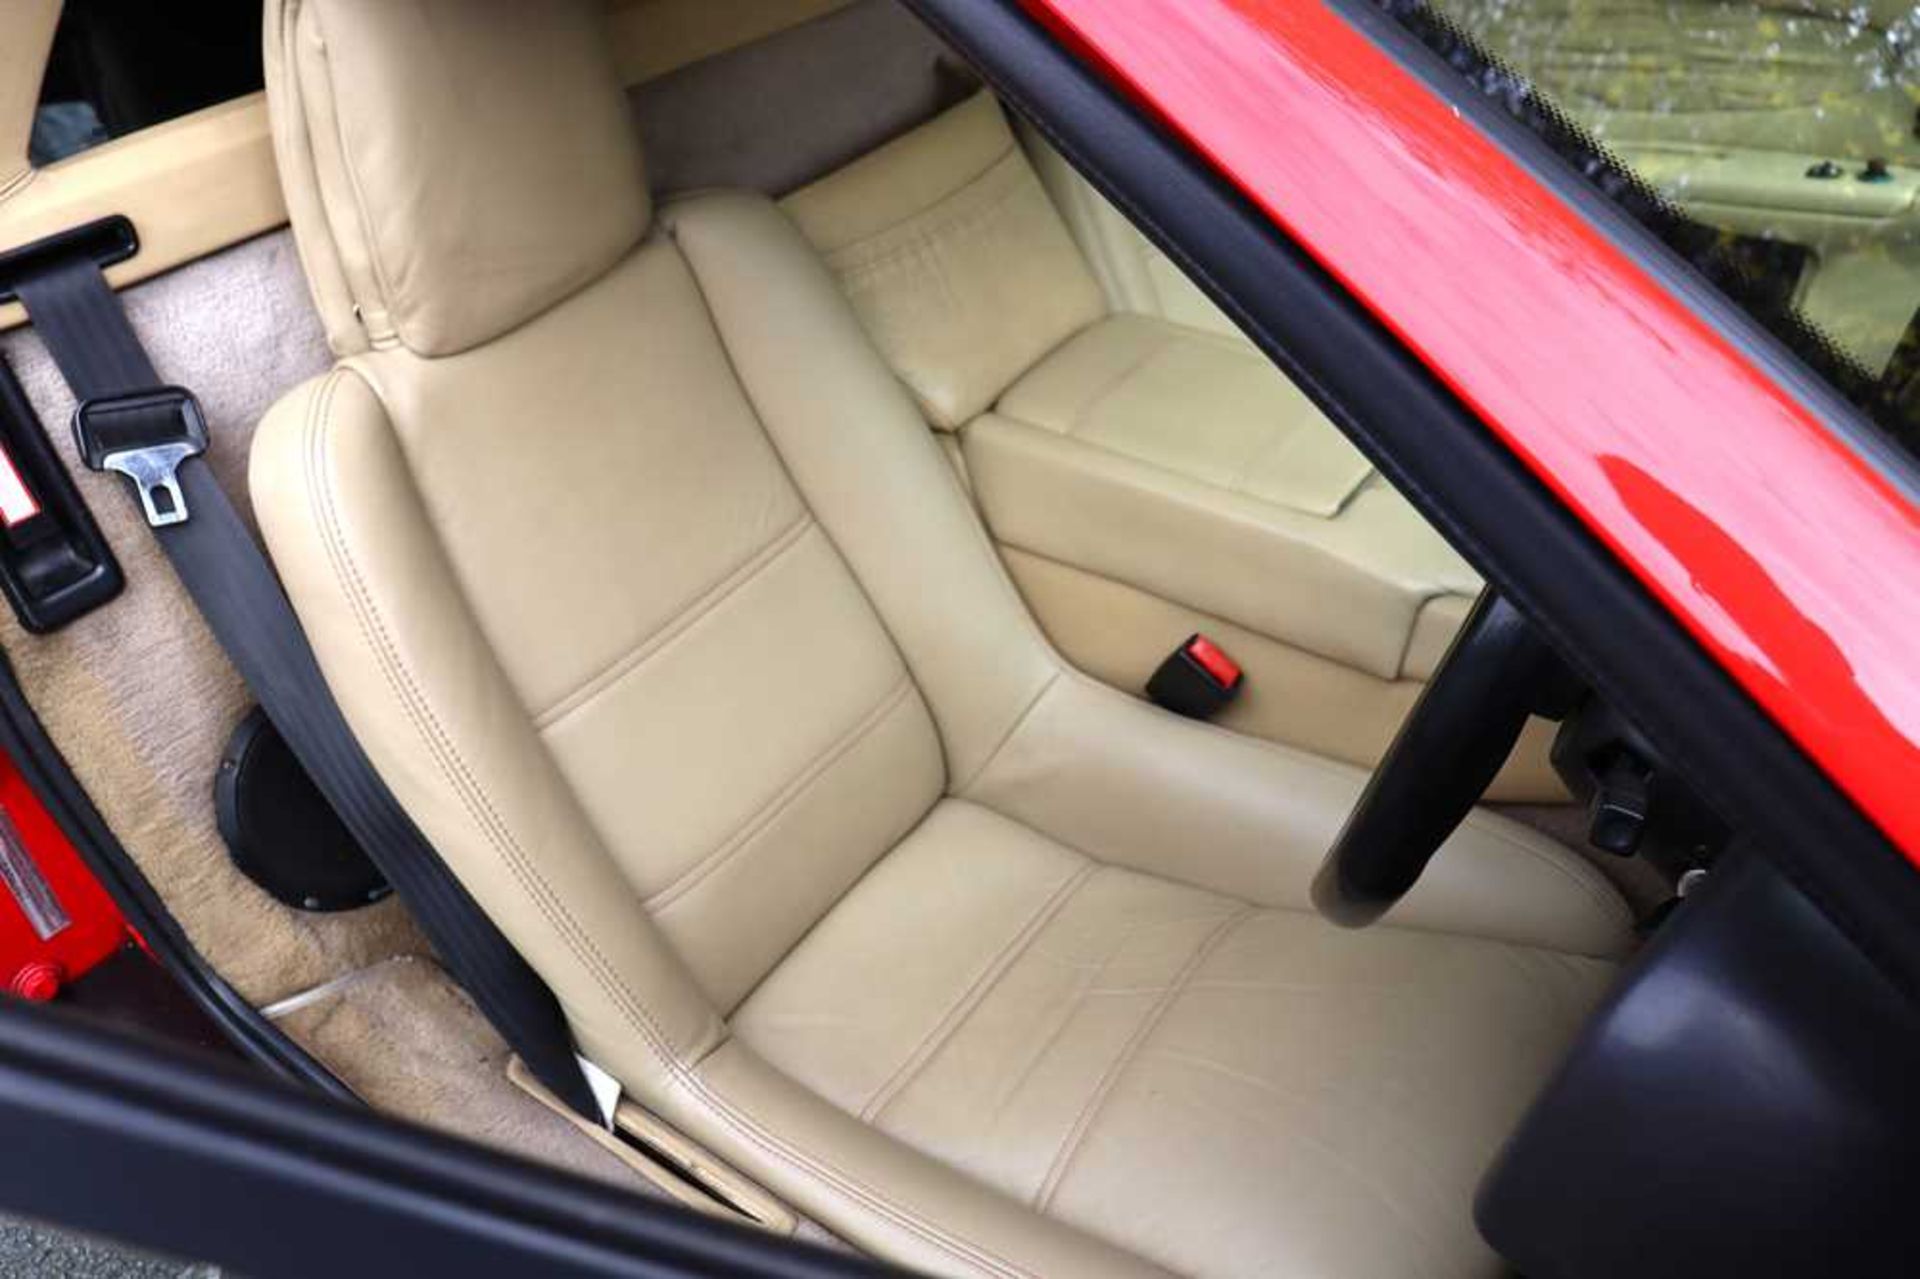 1989 Lotus Esprit Turbo Just 37,000 recorded miles - Image 45 of 72